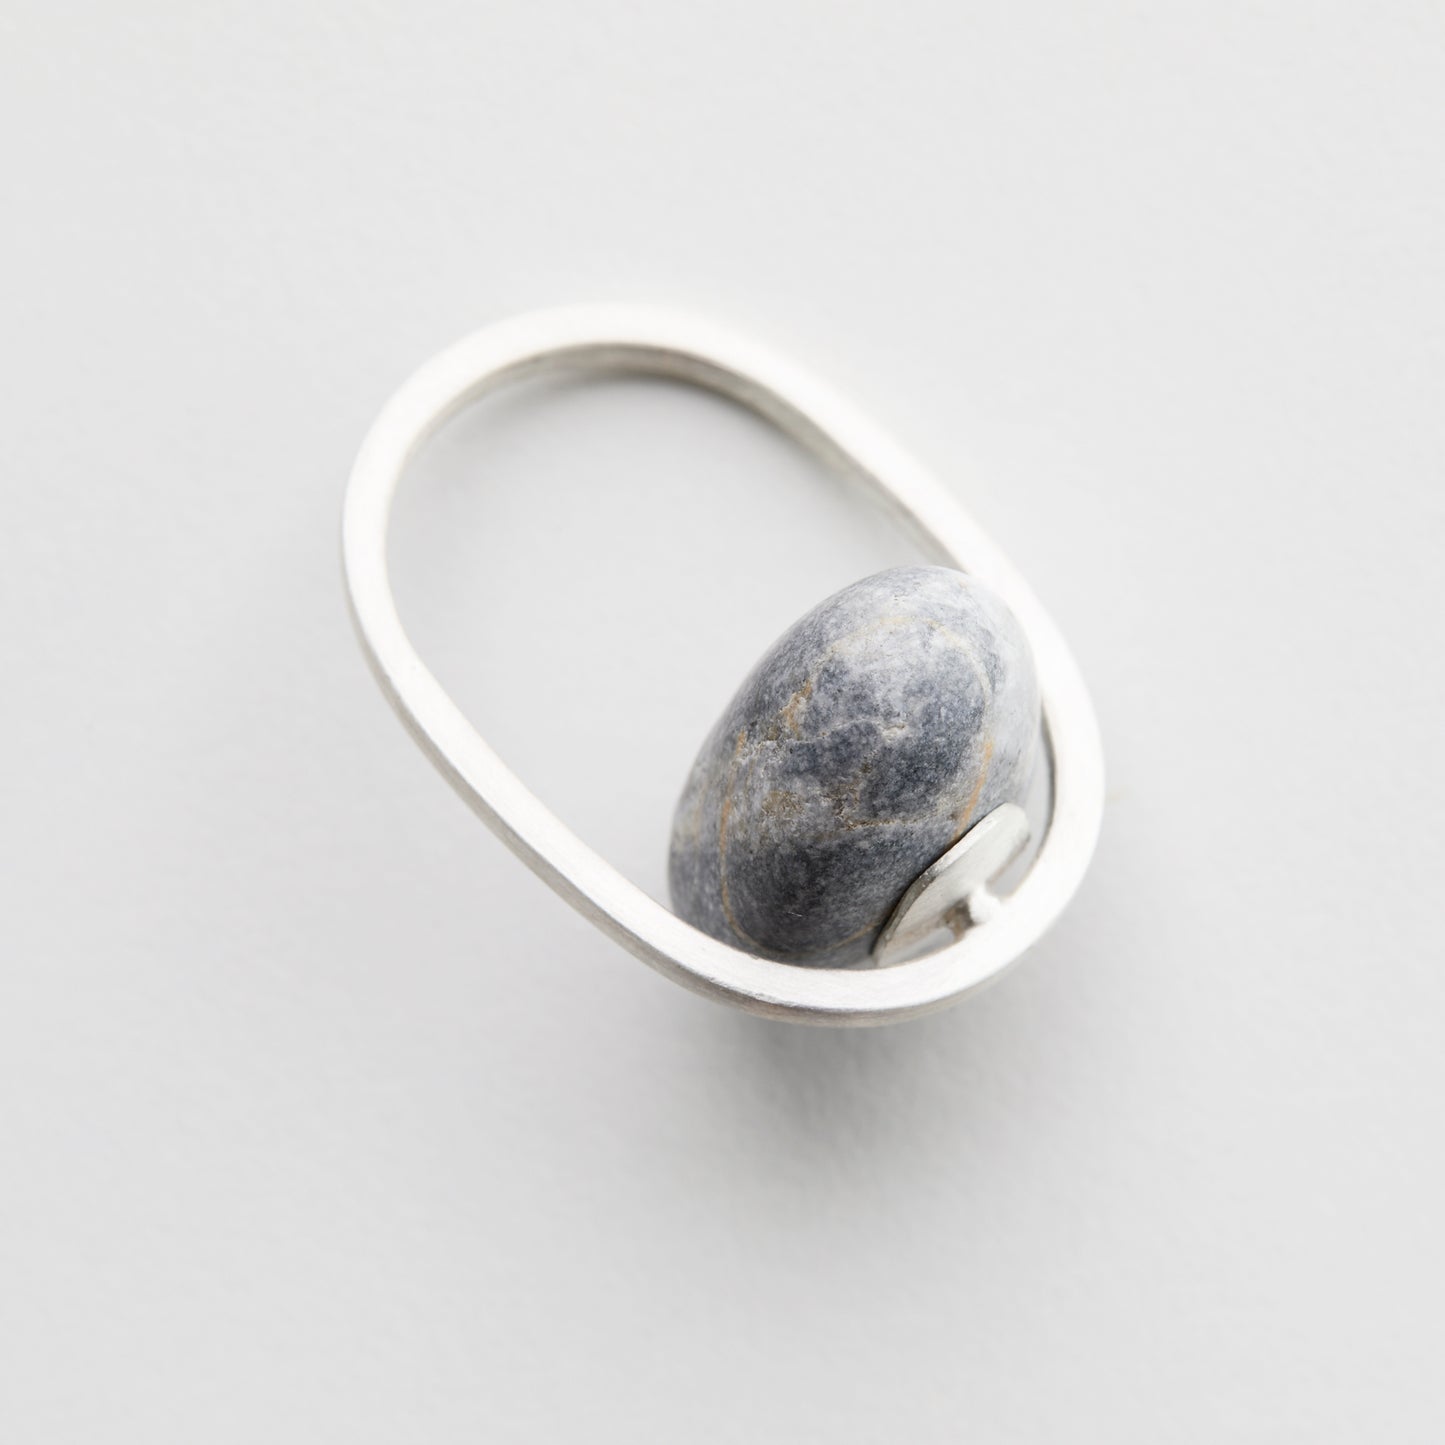 Millie Behrens, "Pebbles ring Embrace", sølv